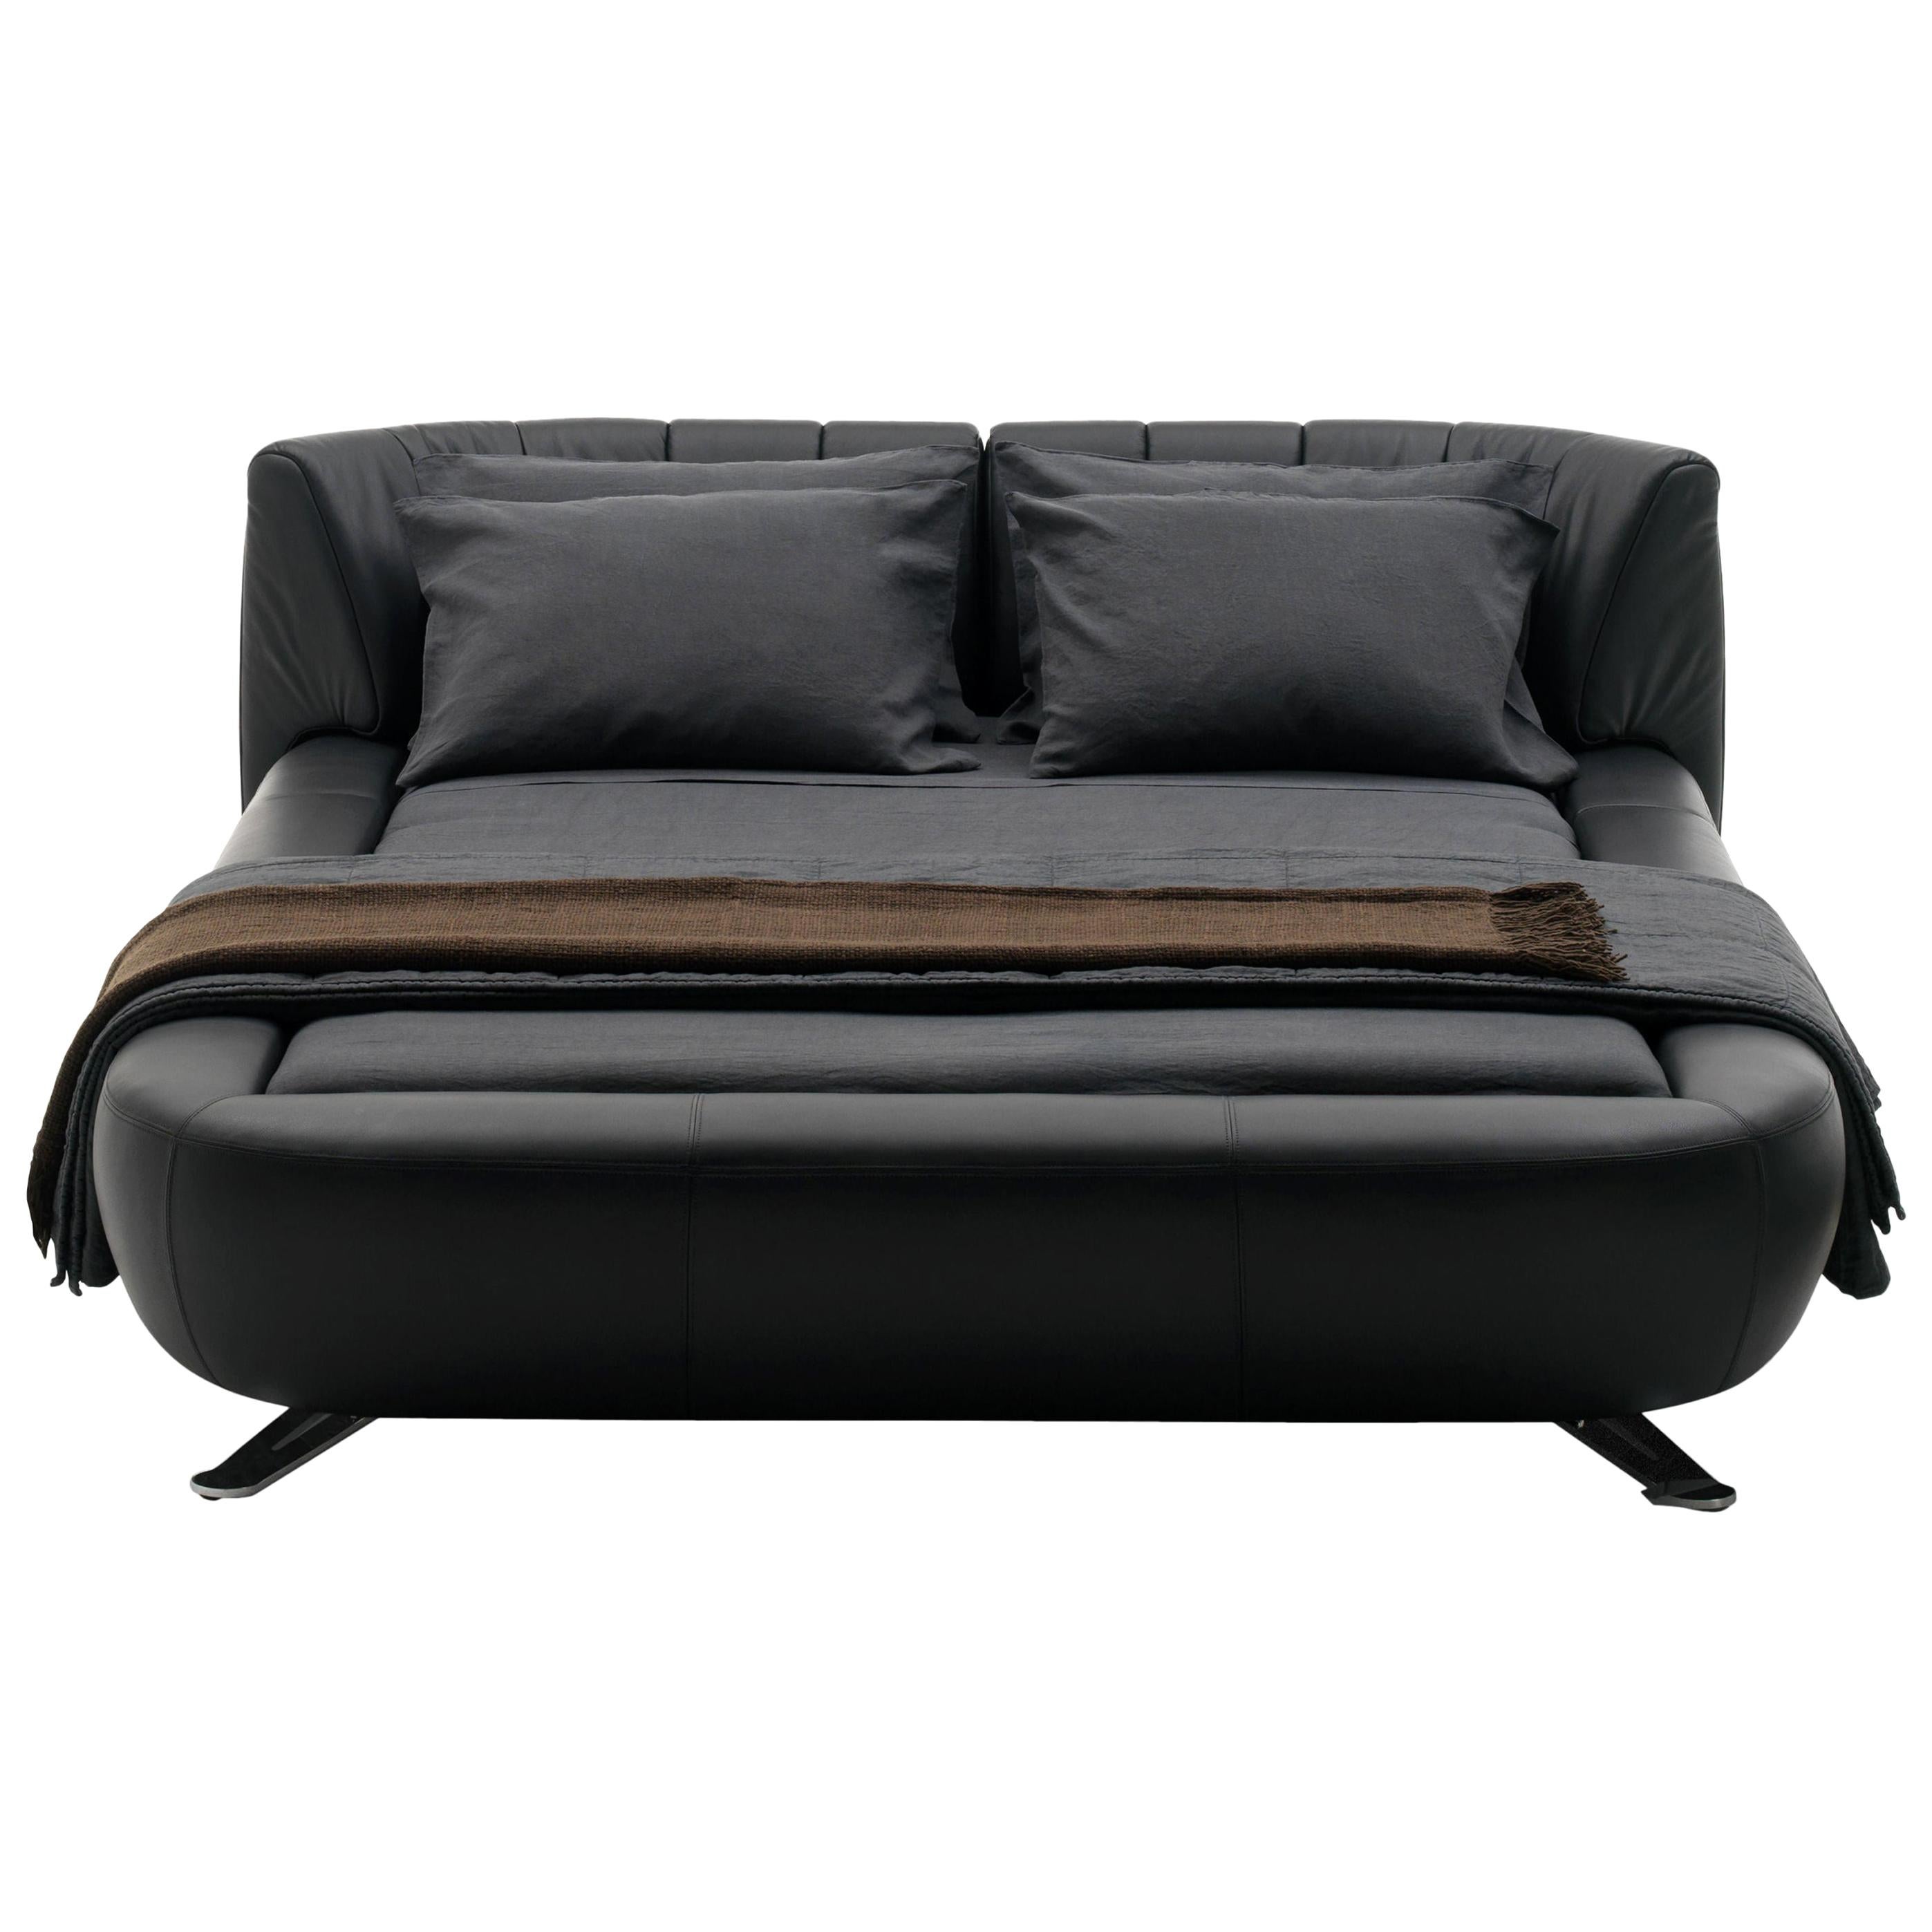 deSede DS-1164 Queen Size Leather Bed by Hugo de Ruiter